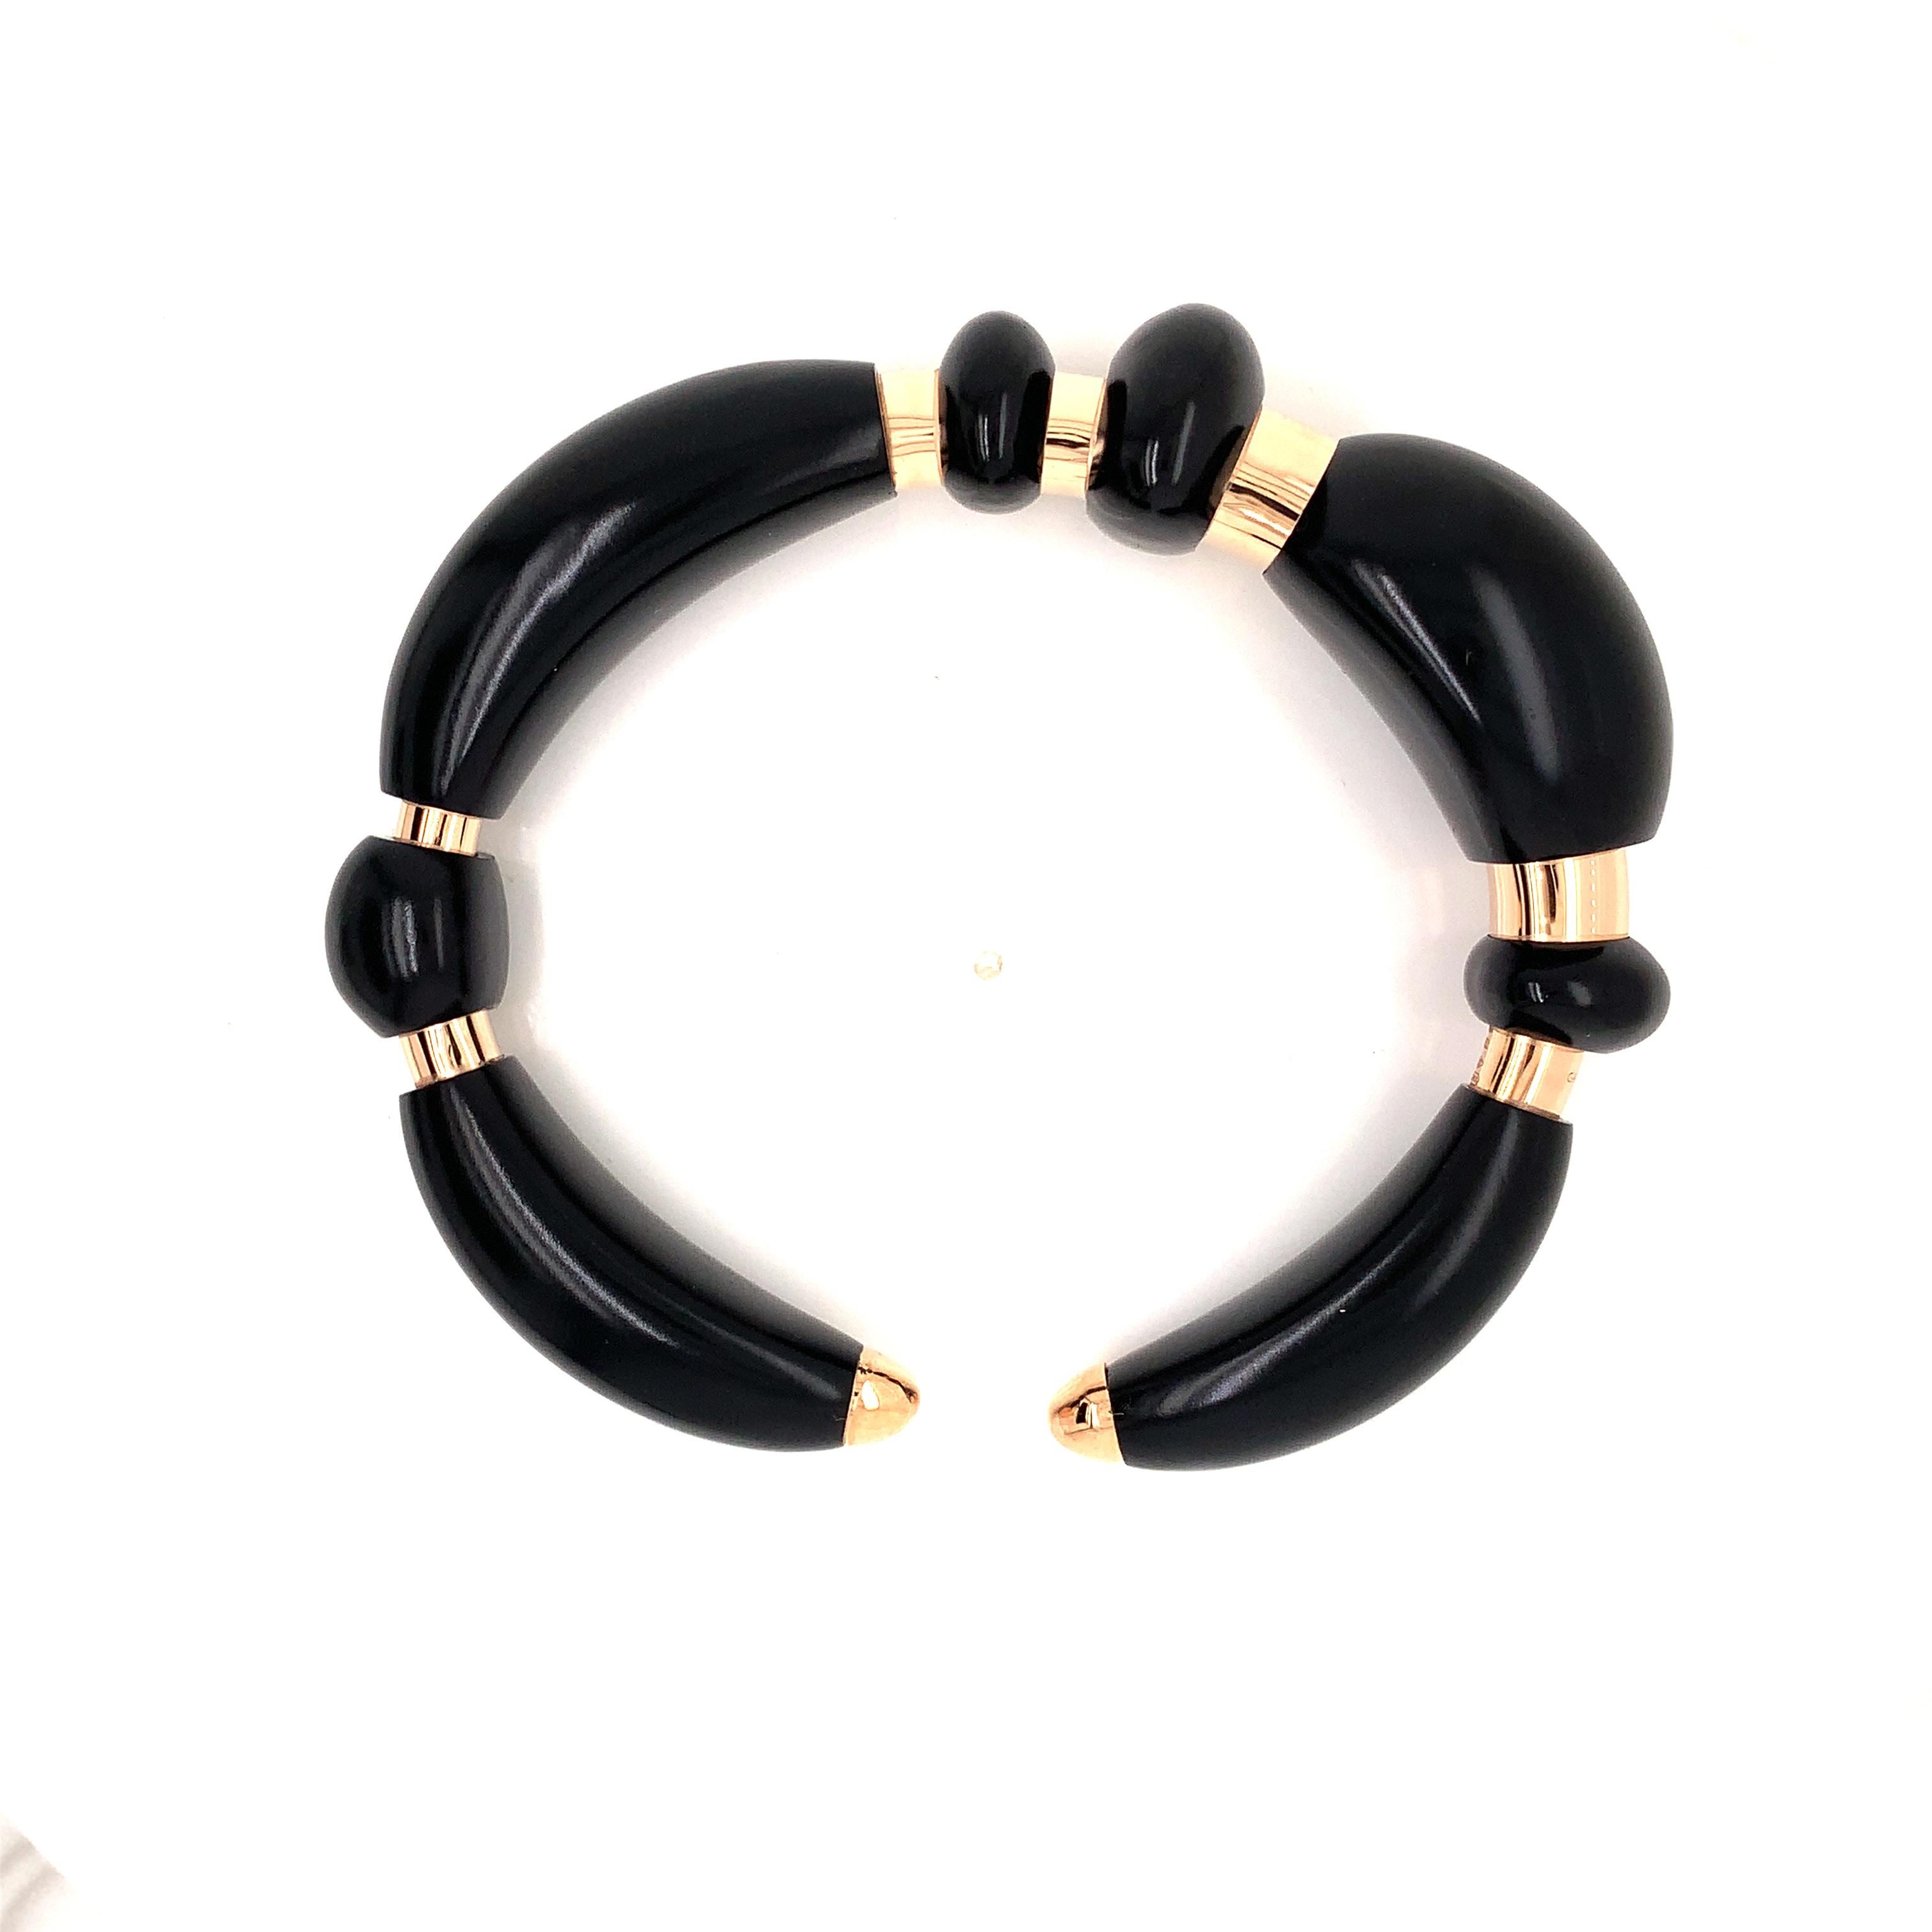 18 Karat Rose Gold and Black Bronze Modern  Bracelet 
New Dolce Vita Collection by Garavelli
Cuff bracelet - Size 7